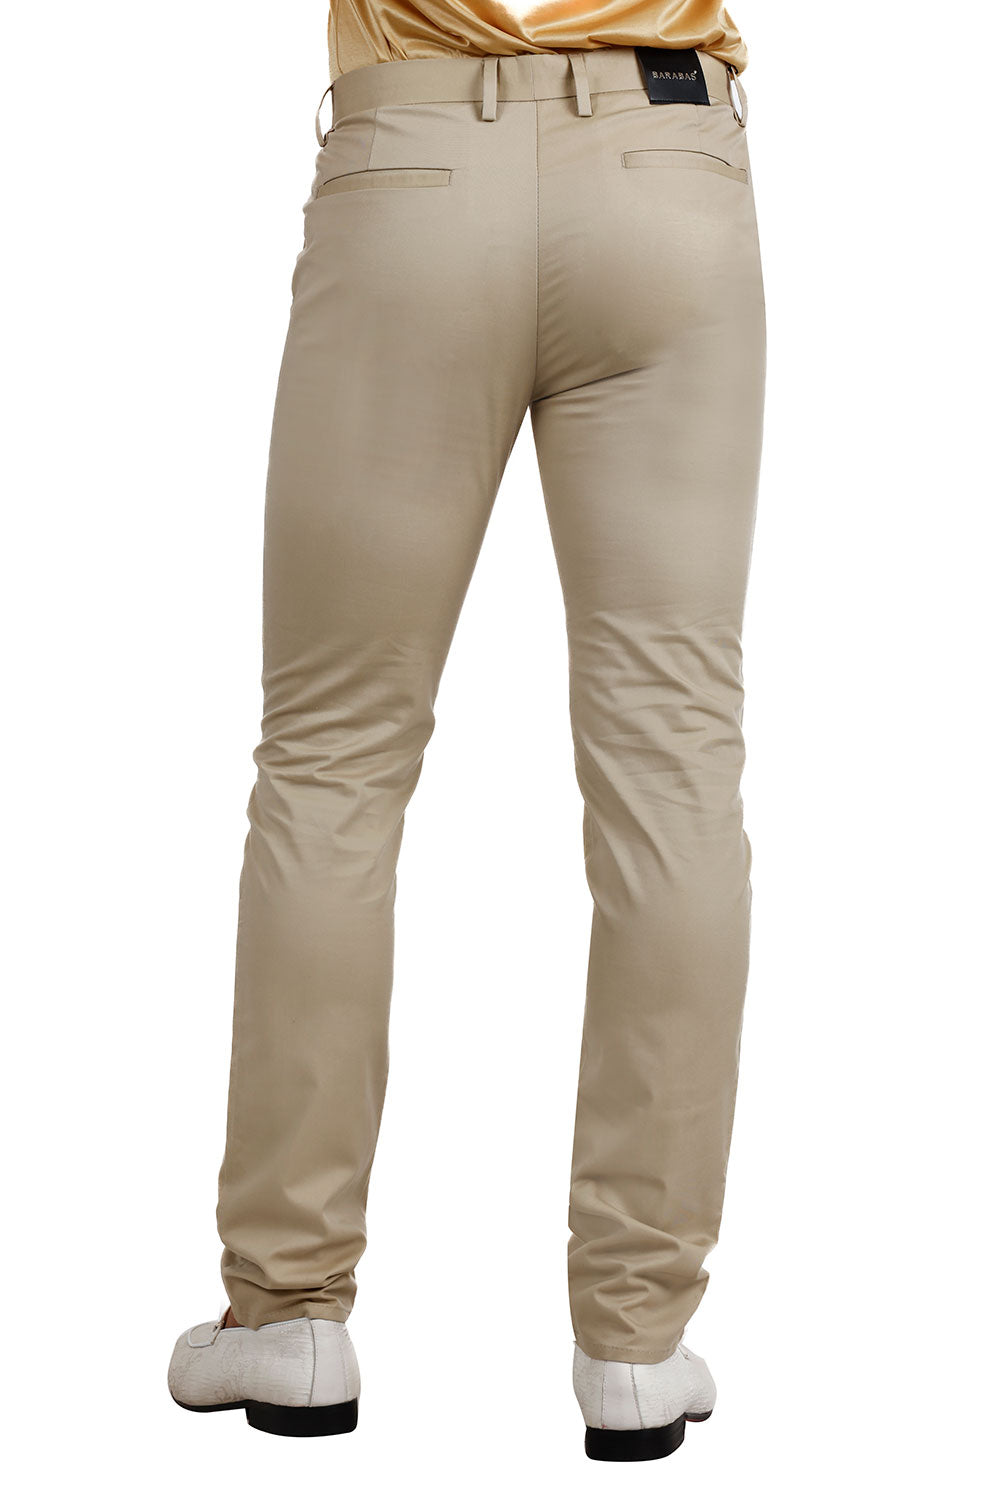 BARABAS Men's Solid Basic Color Casual Dress Pants B2062 Sand